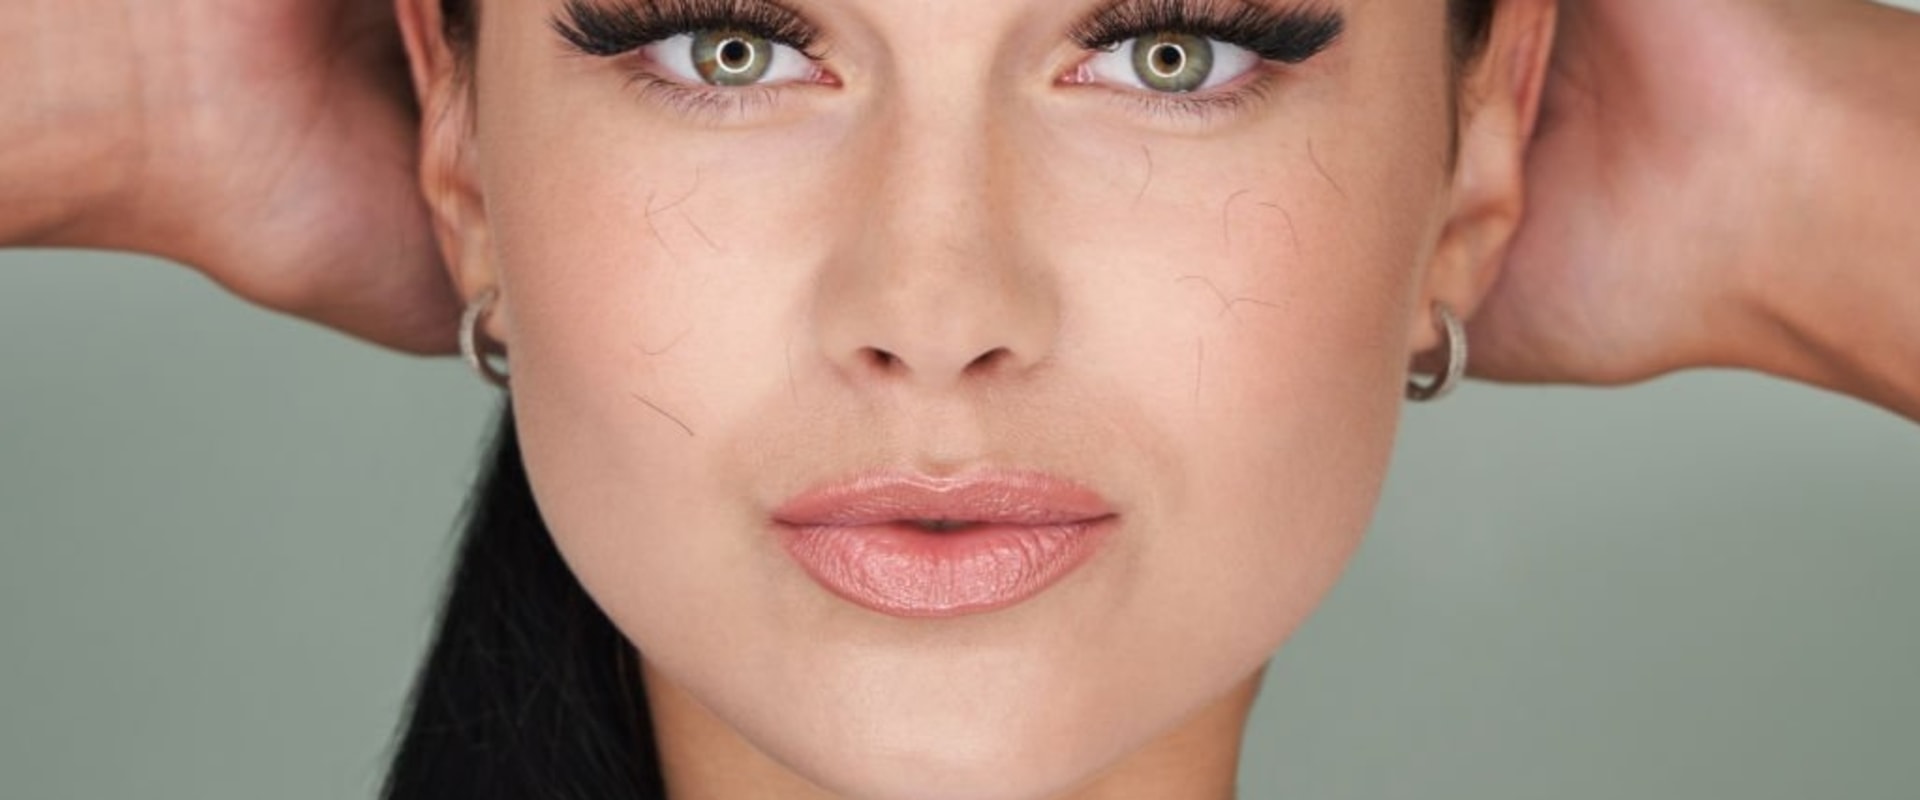 How Long Do Eyelash Extensions Last? An Expert's Guide